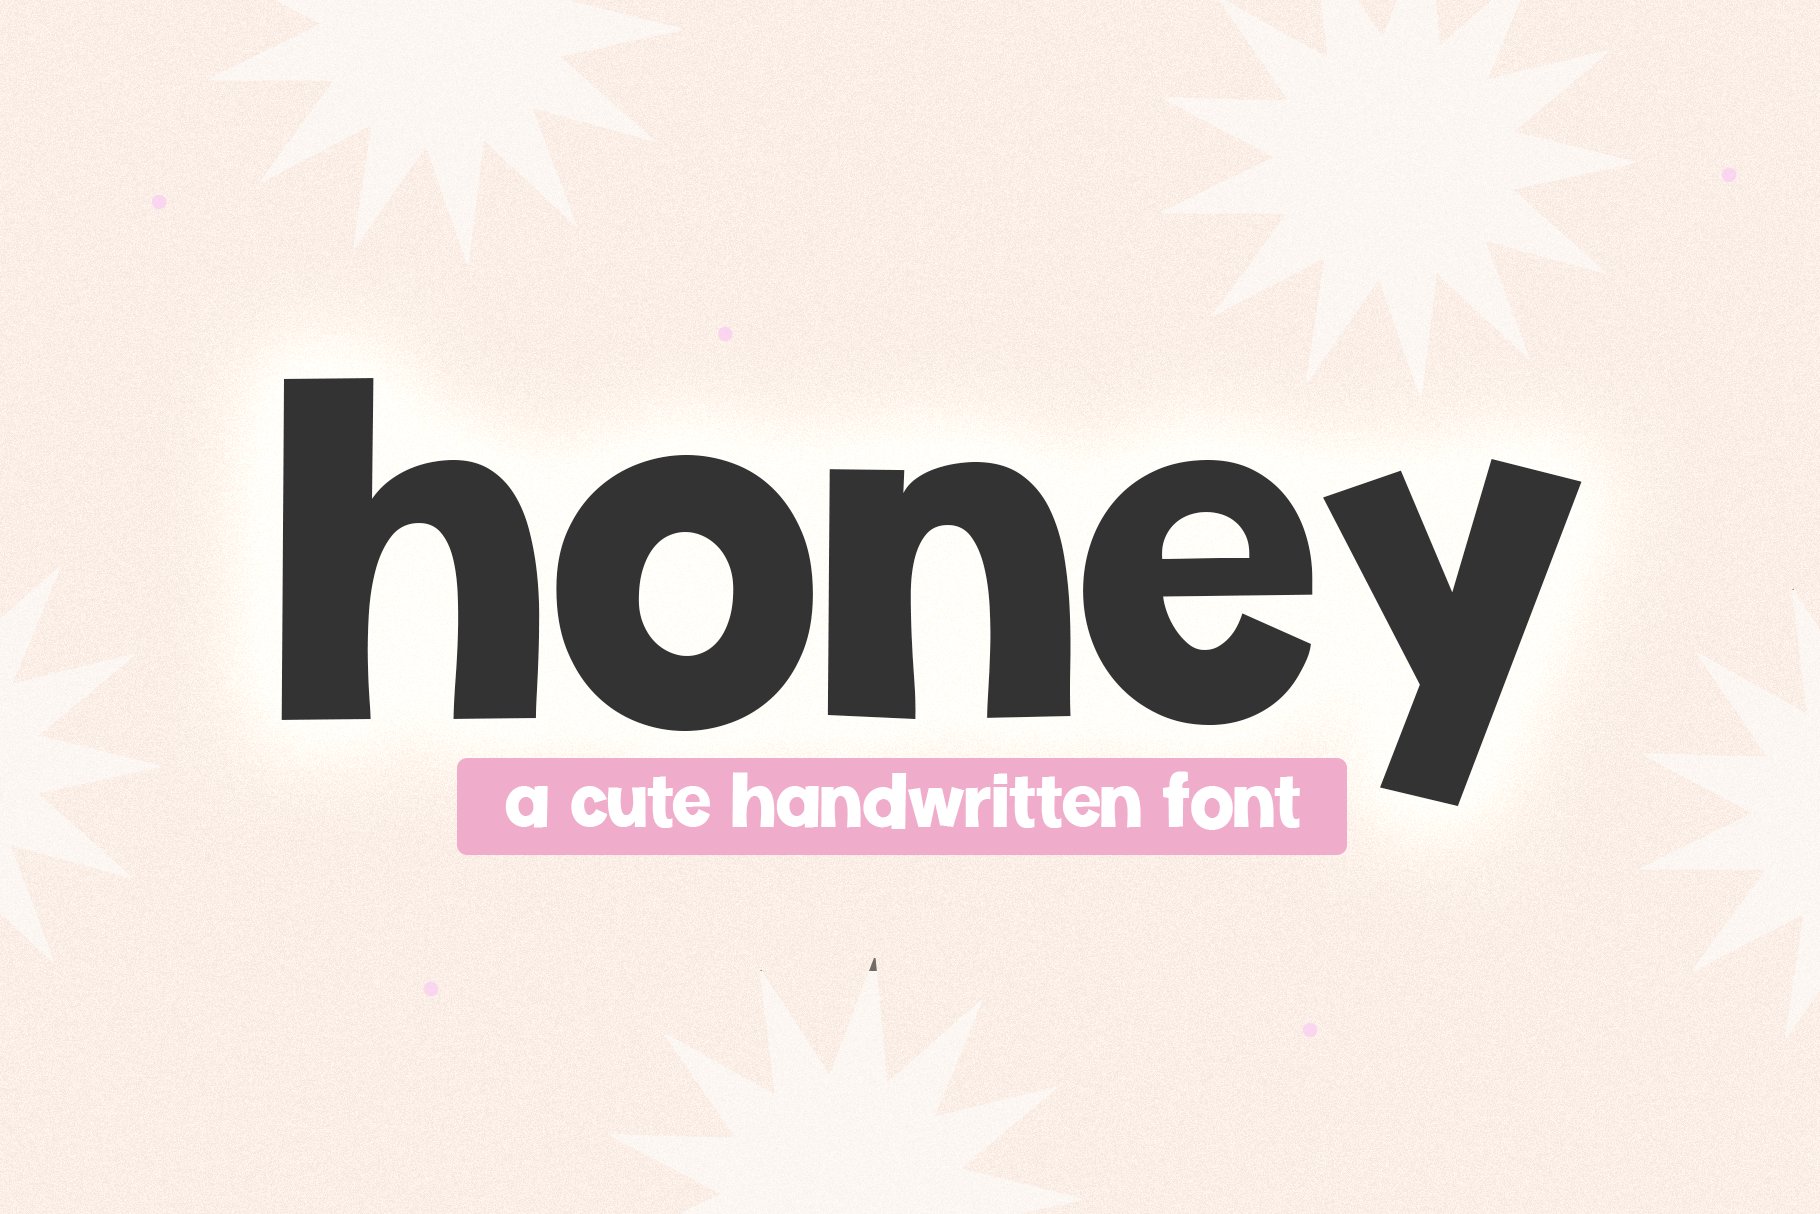 Honey | Fun Handwritten Font cover image.